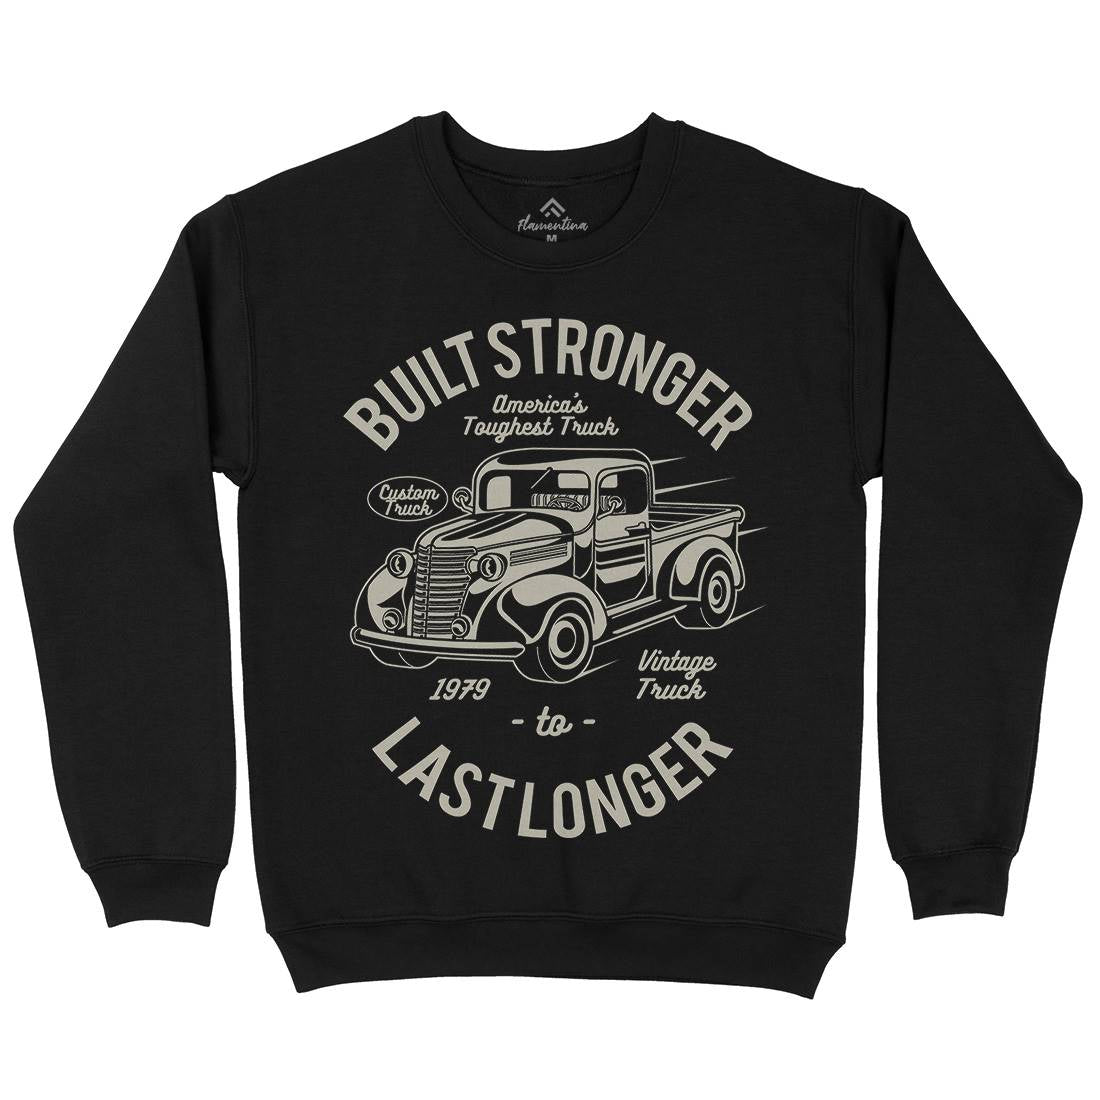 Built Stronger Kids Crew Neck Sweatshirt Cars A023